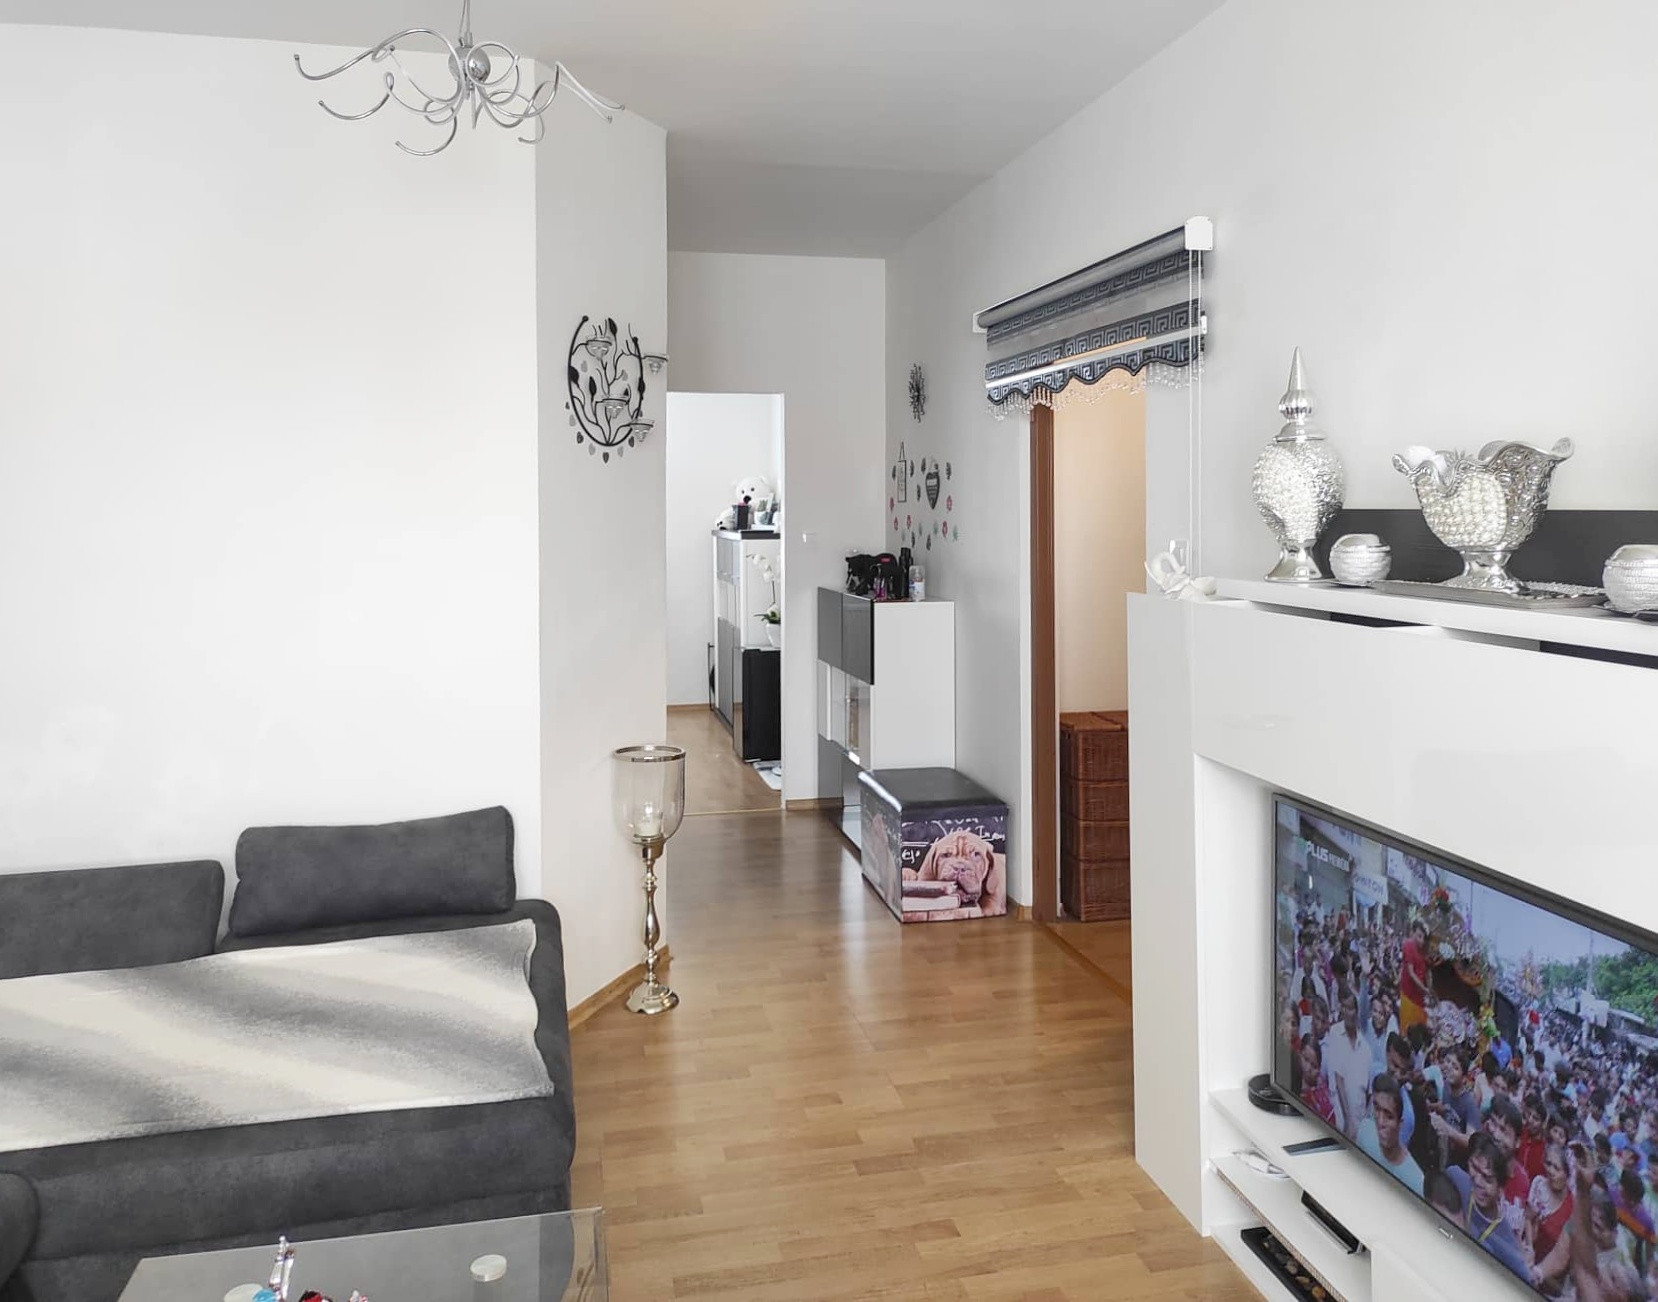 PEGASREAL ponúka na predaj 2,5 izbový byt v meste Skalica